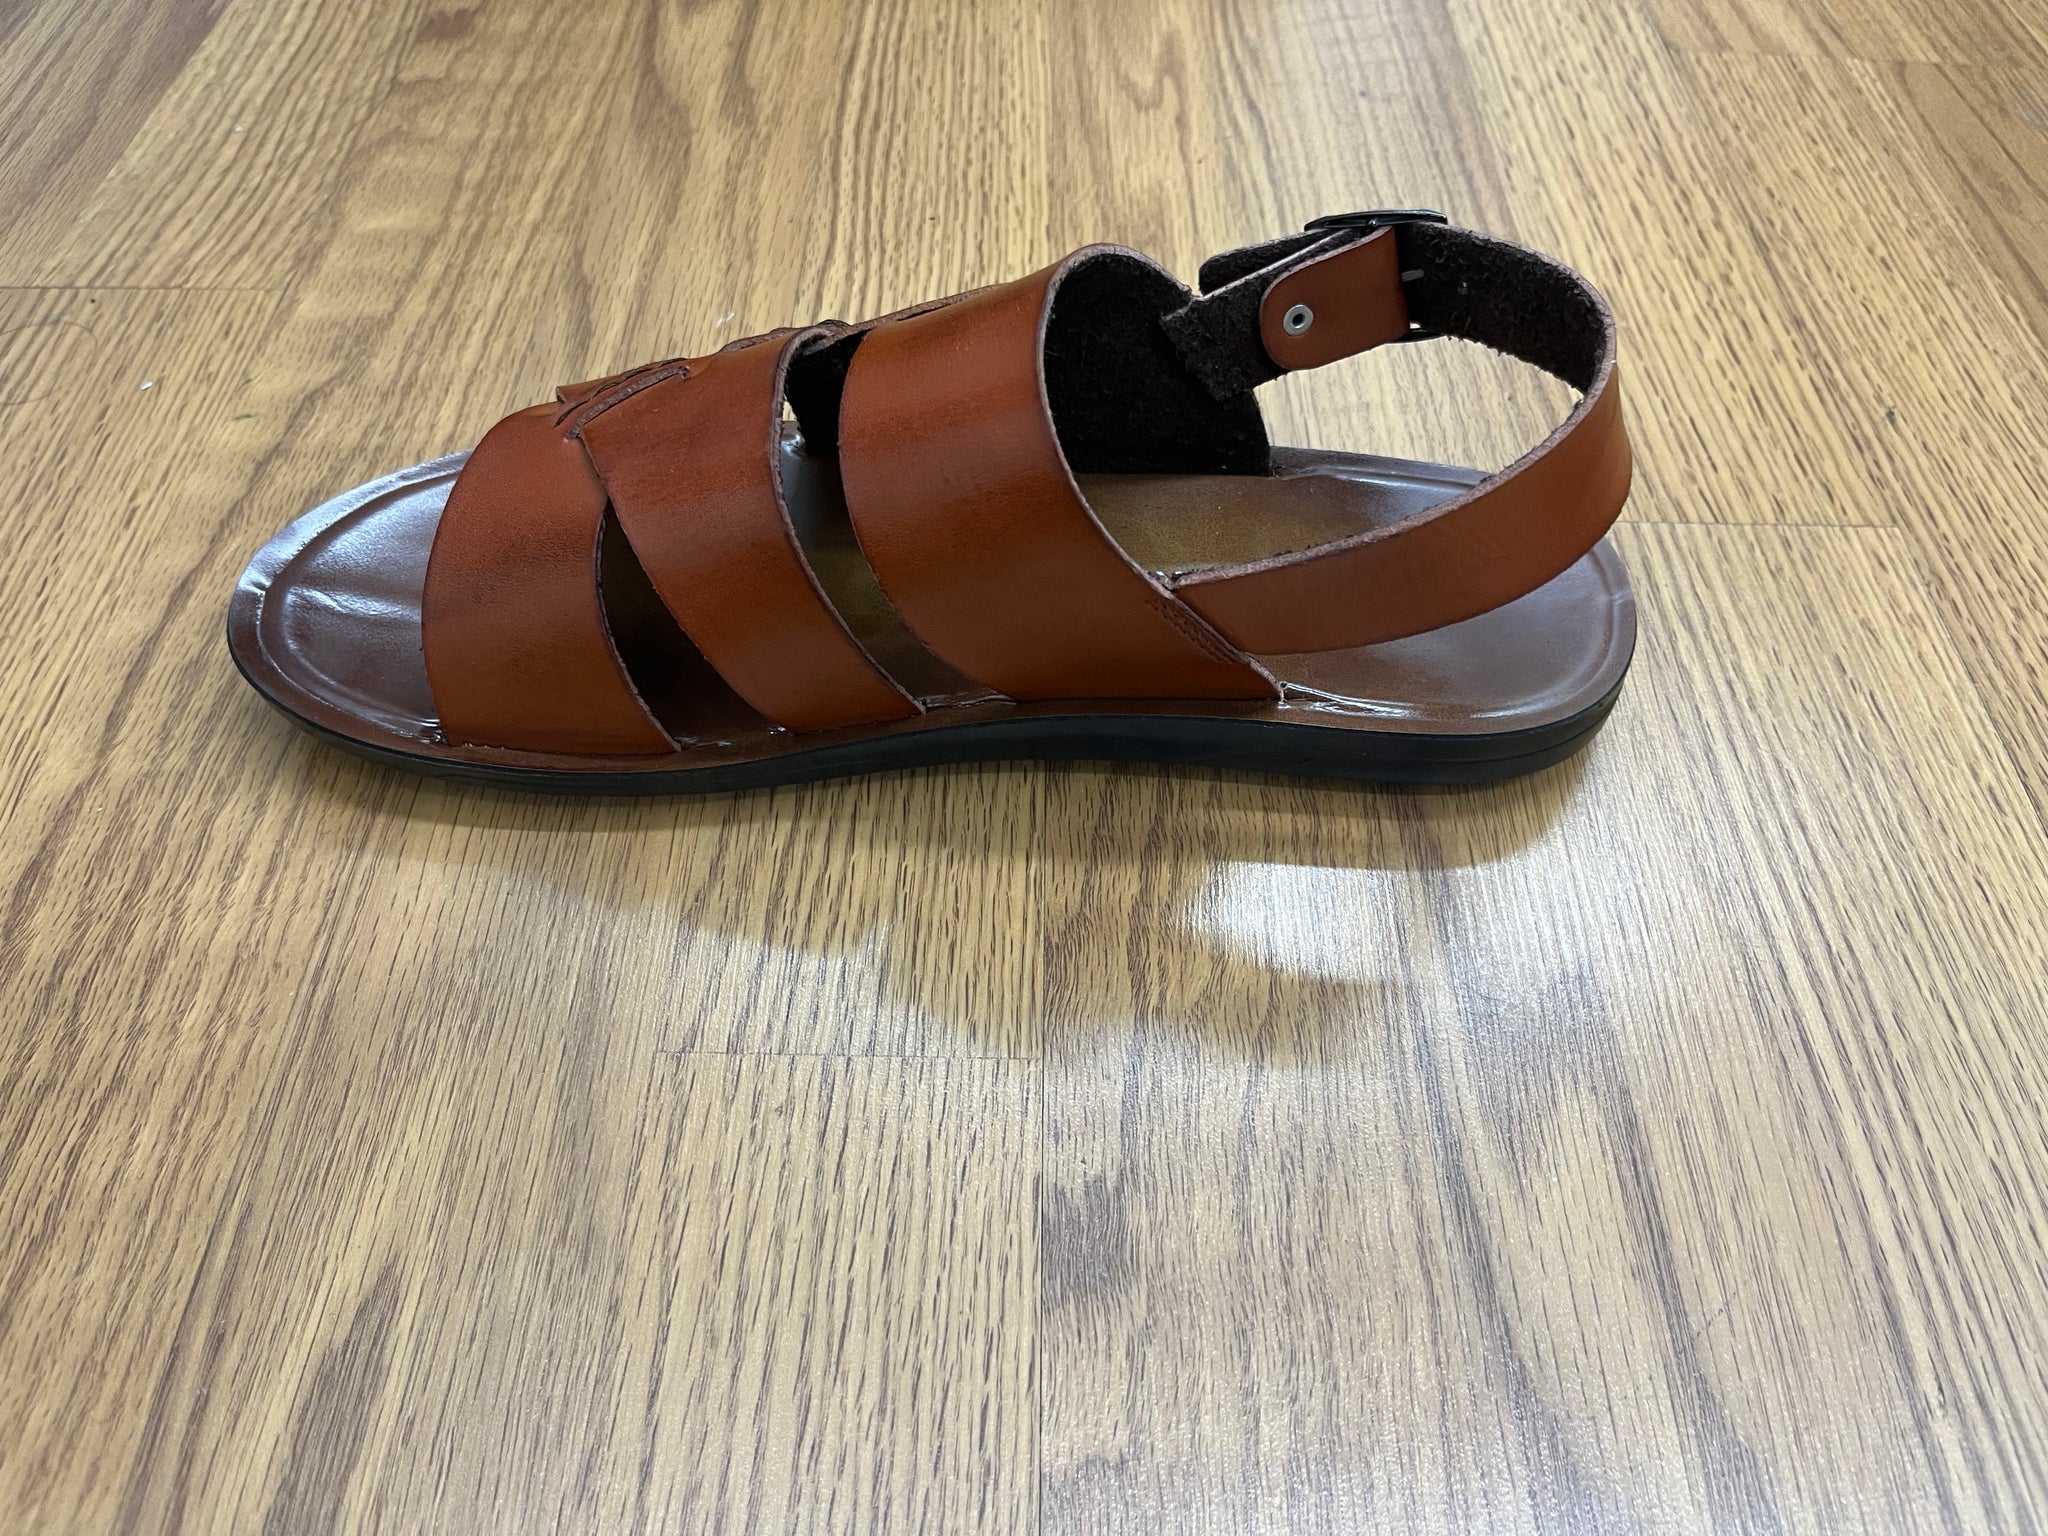 Men's Leather Sandals Cross Style; Tan